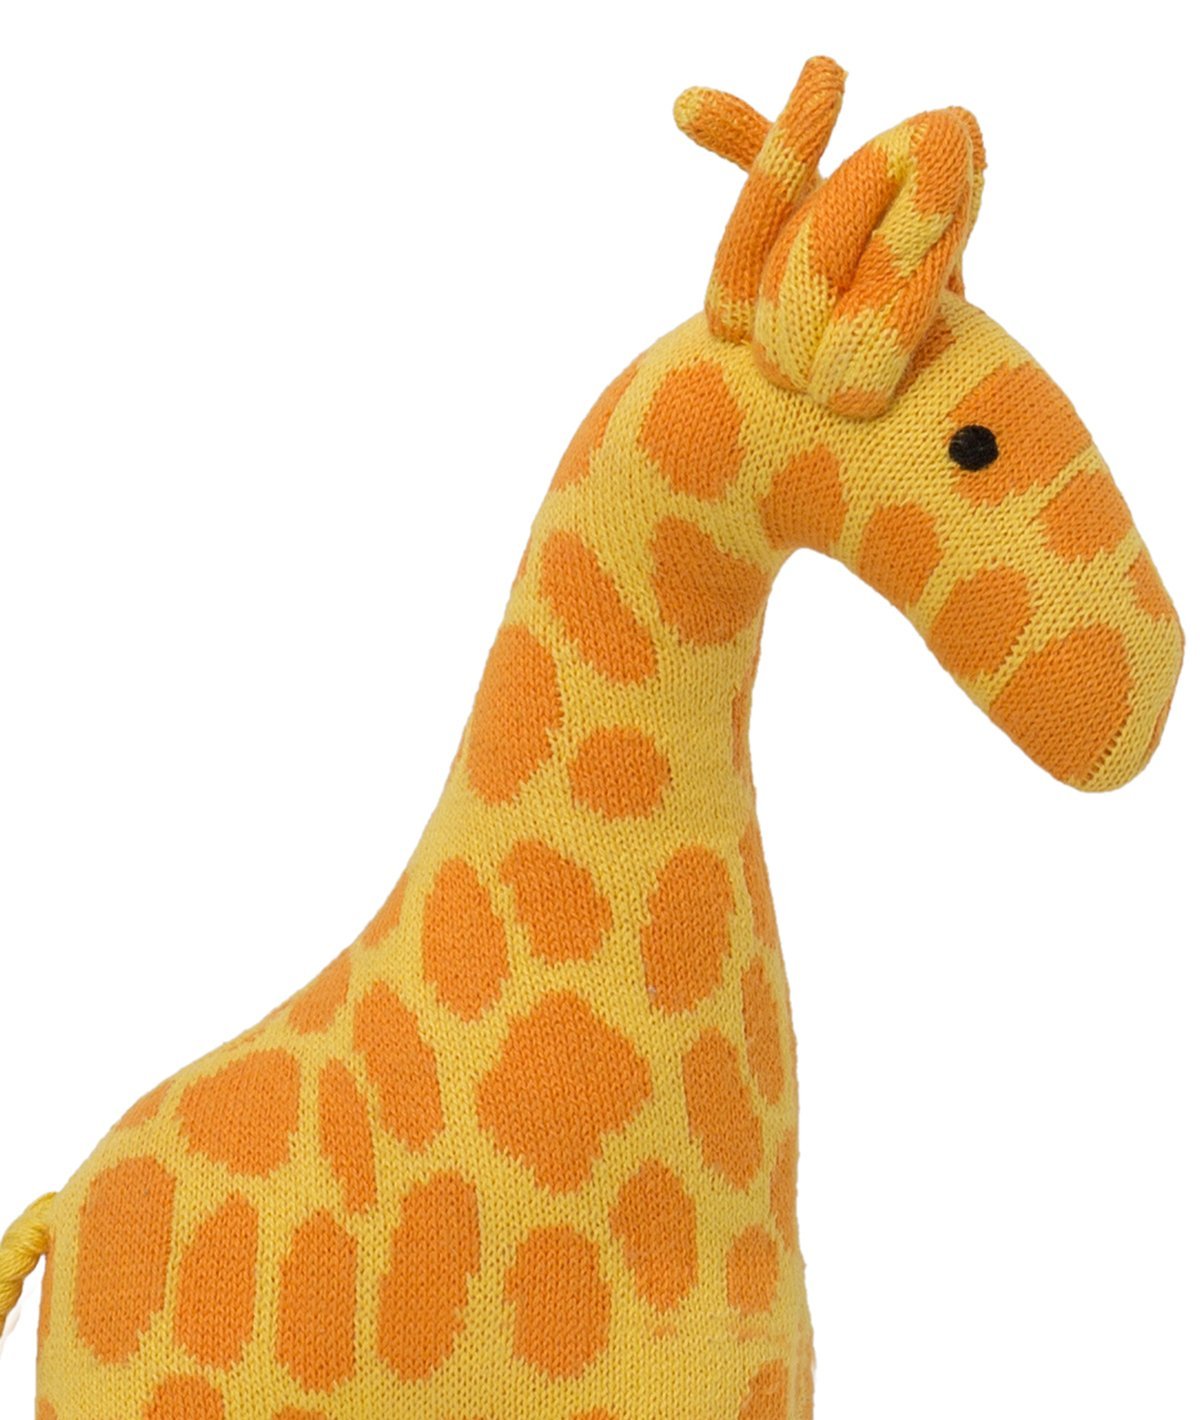 Giraffe - Yellow & Orange 100% Cotton Knitted Stuffed Soft Toy for Babies / Kids